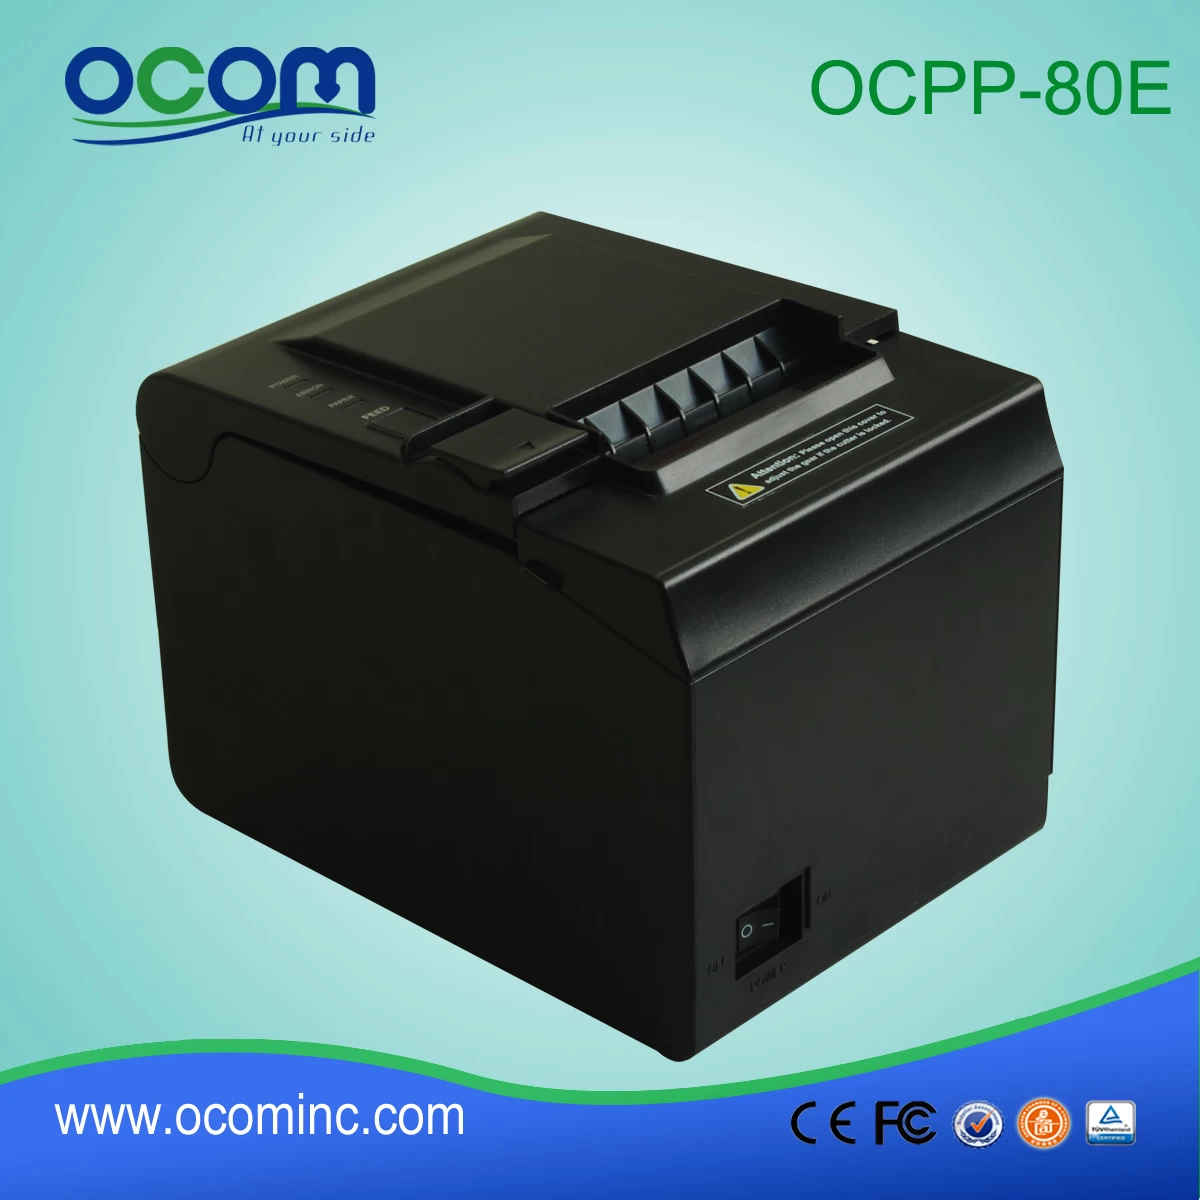 OCPP-80E USB / parallel auto cutter 80mm cheap receipt printer pos thermal